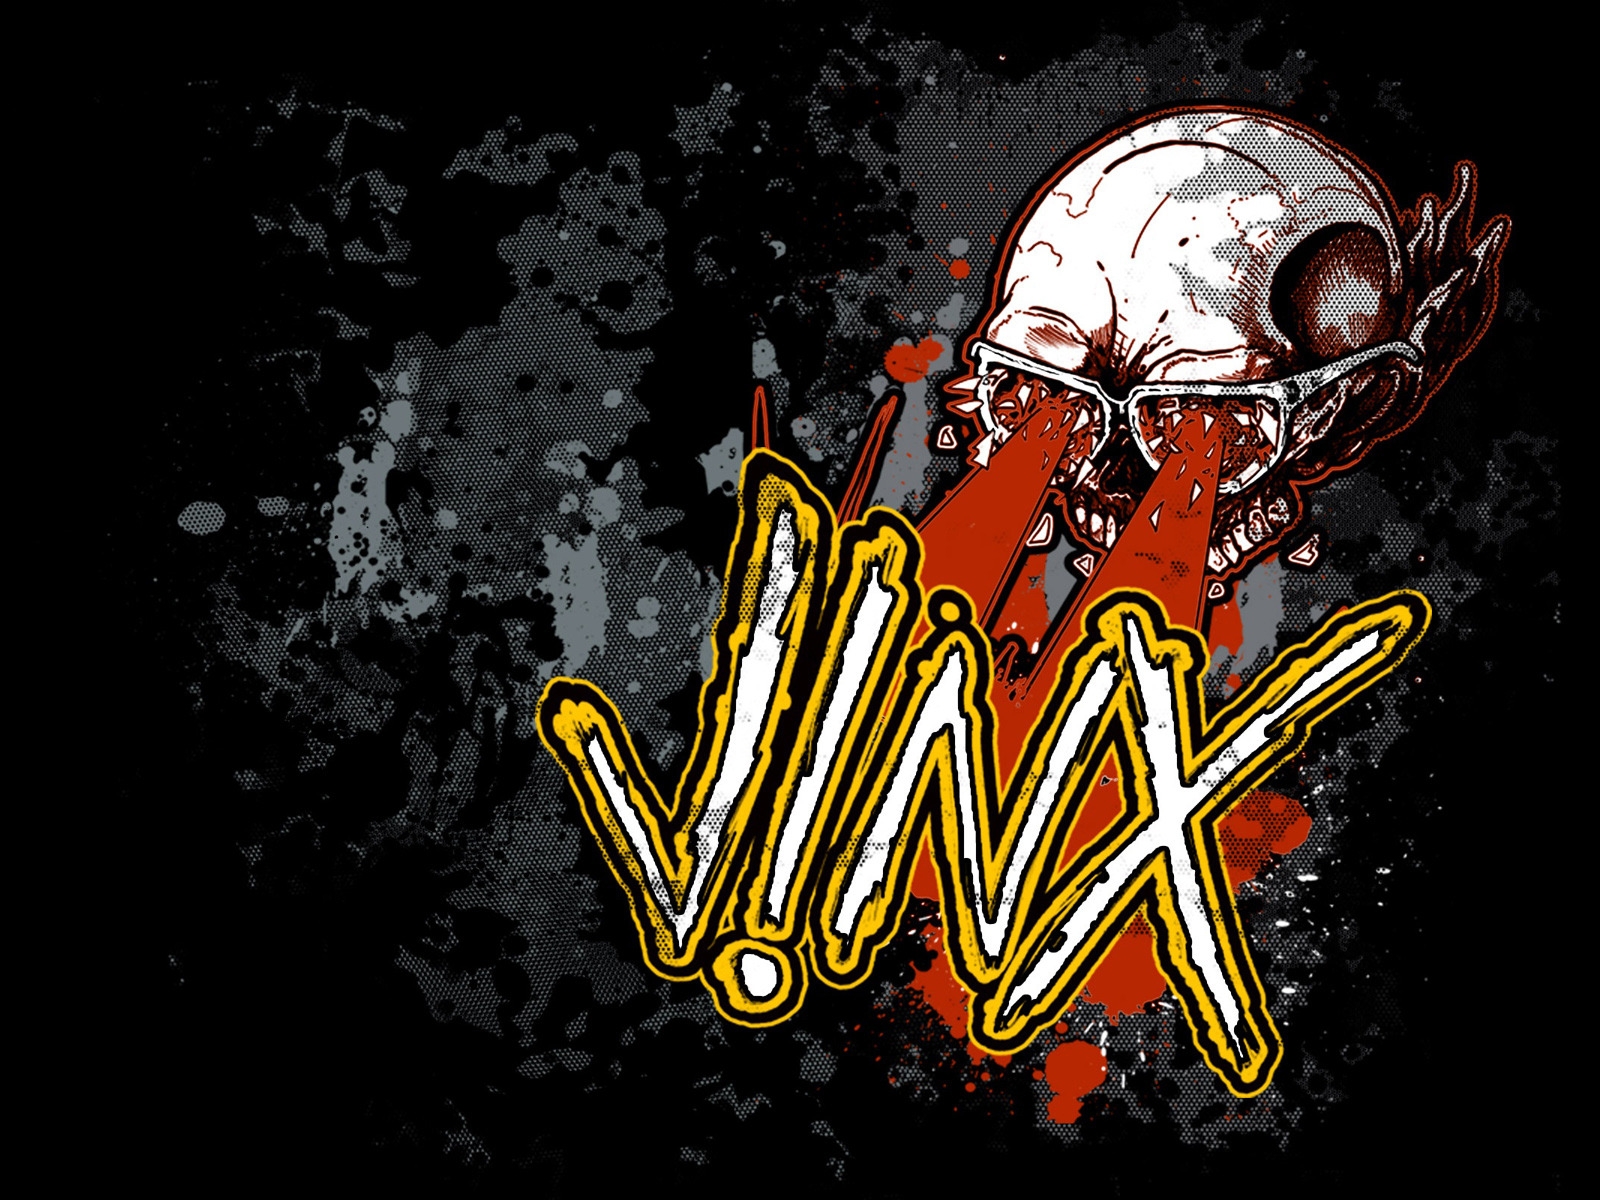 Skull Vinx for 1600 x 1200 resolution